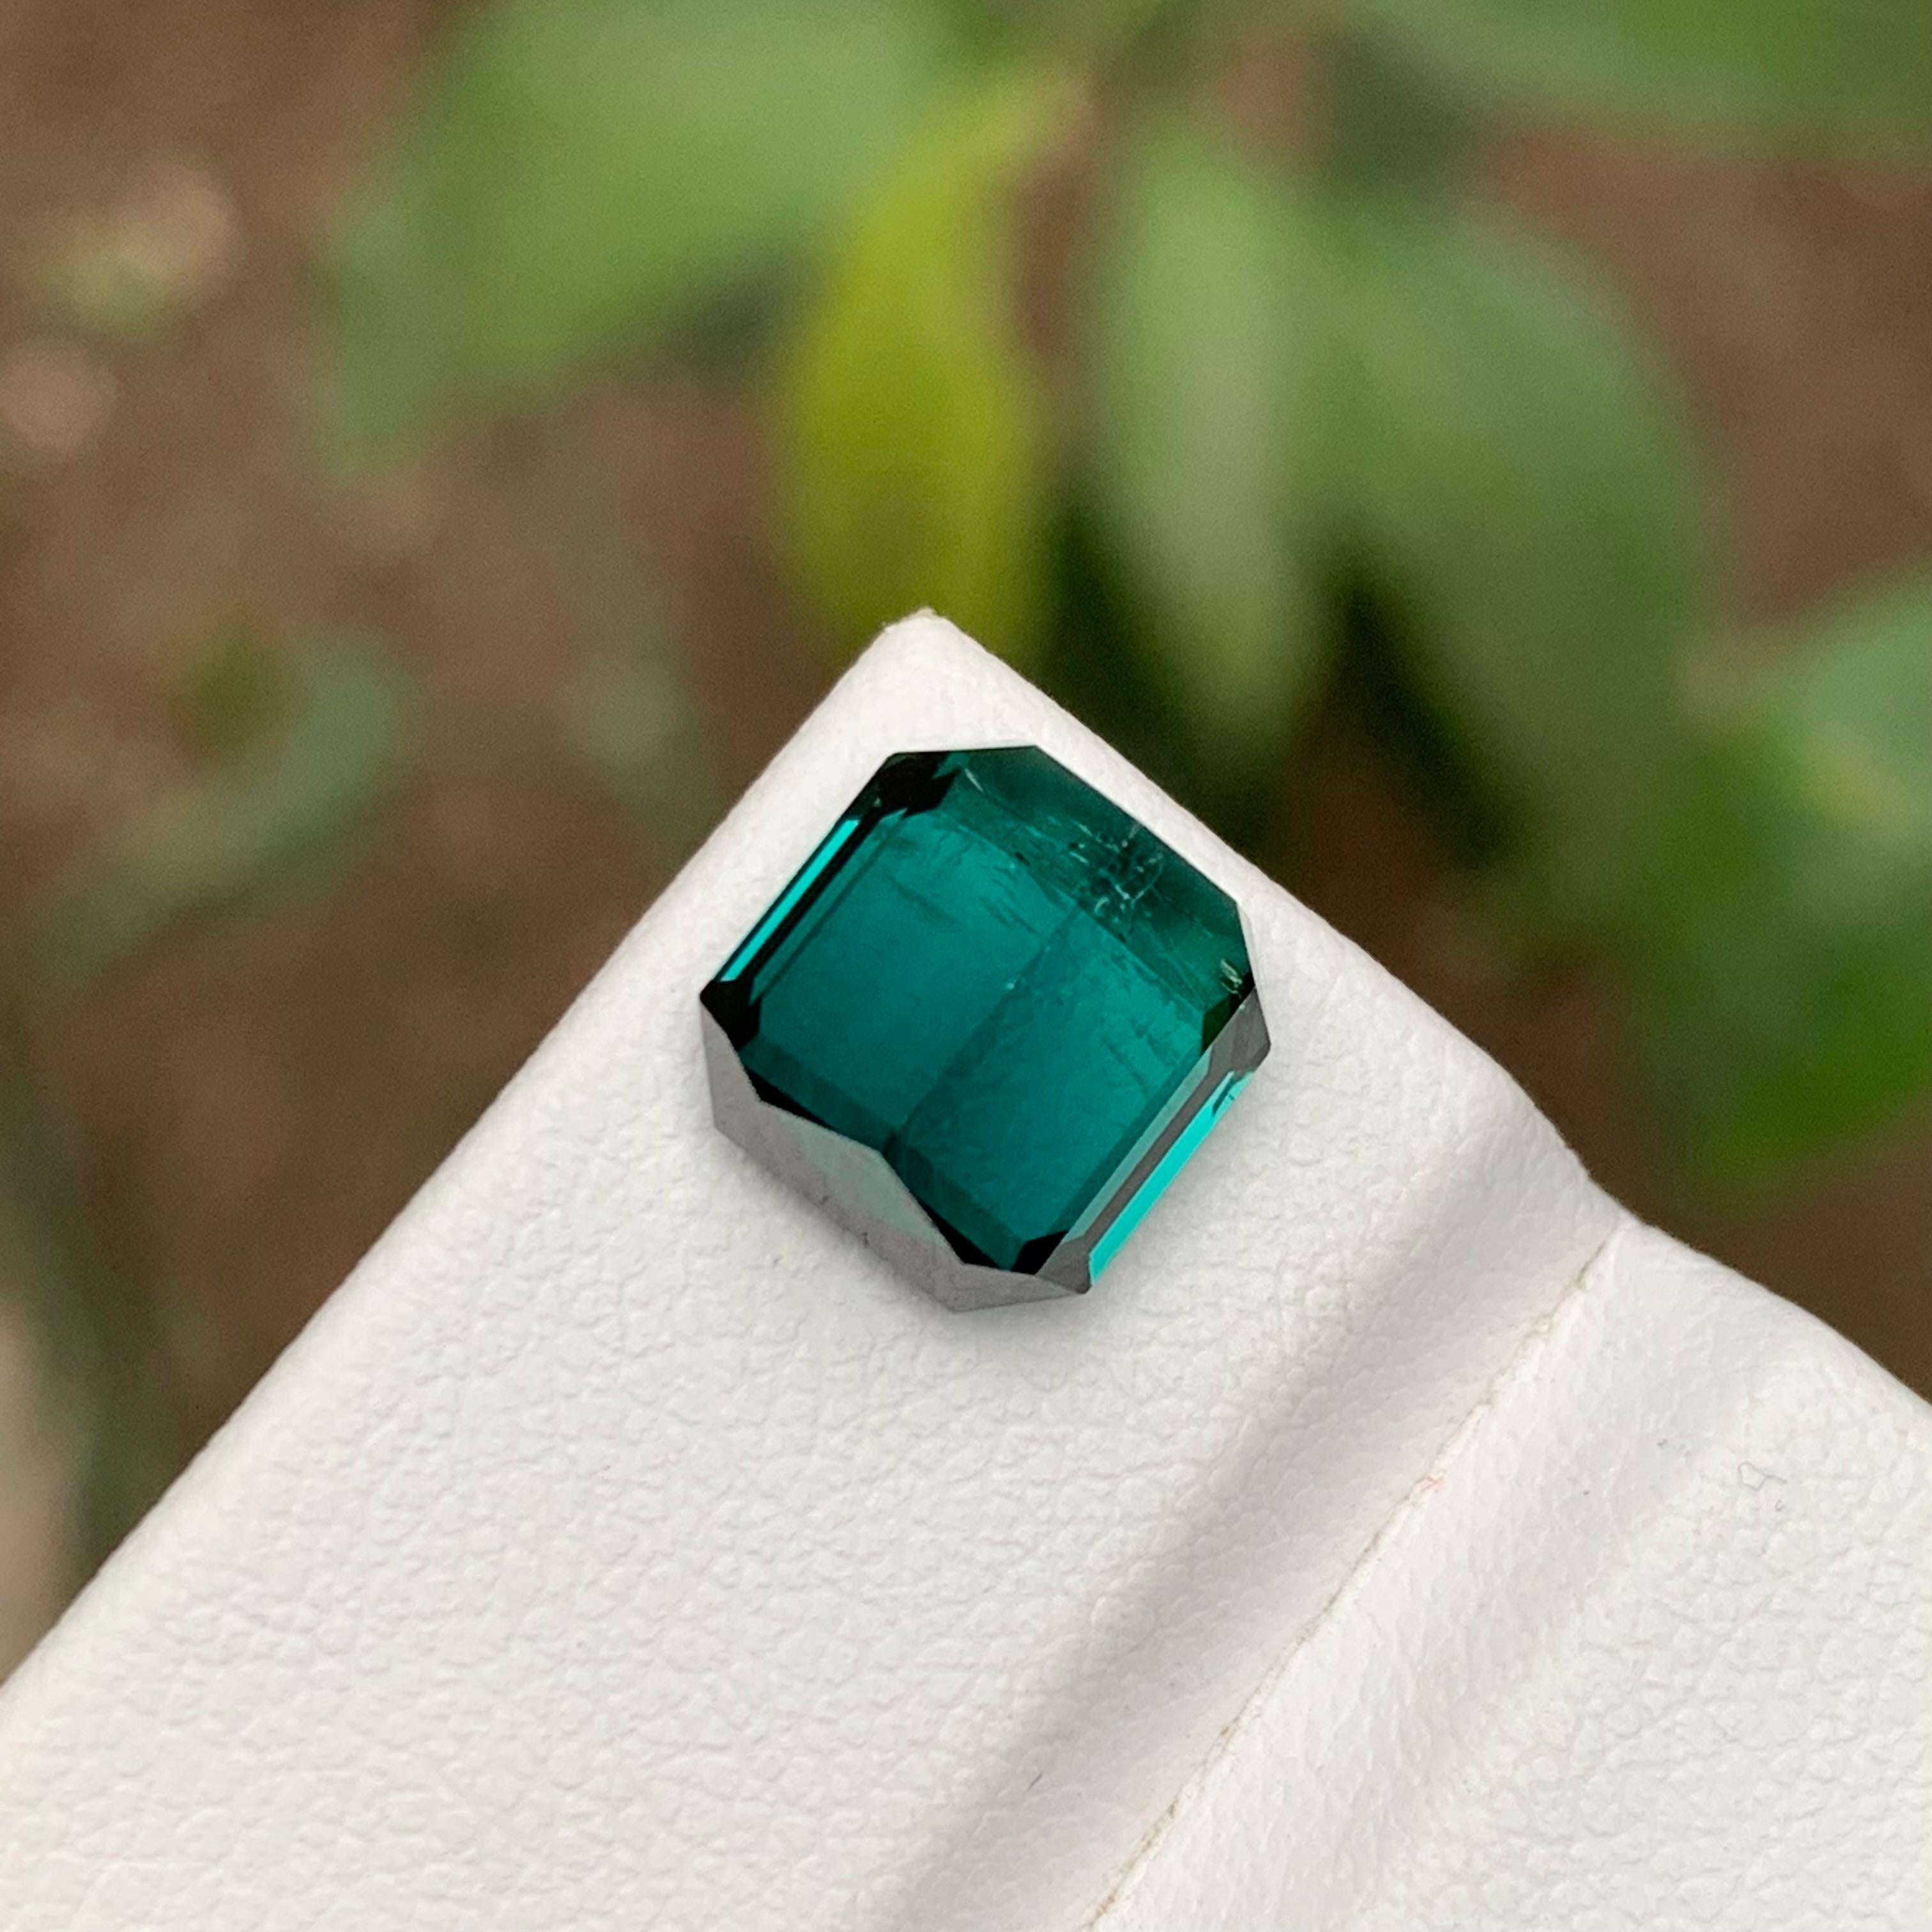 Rare Vibrant Lagoon Greenish Blue Tourmaline Gemstone, 4.20 Ct Emerald Cut-Ring For Sale 3